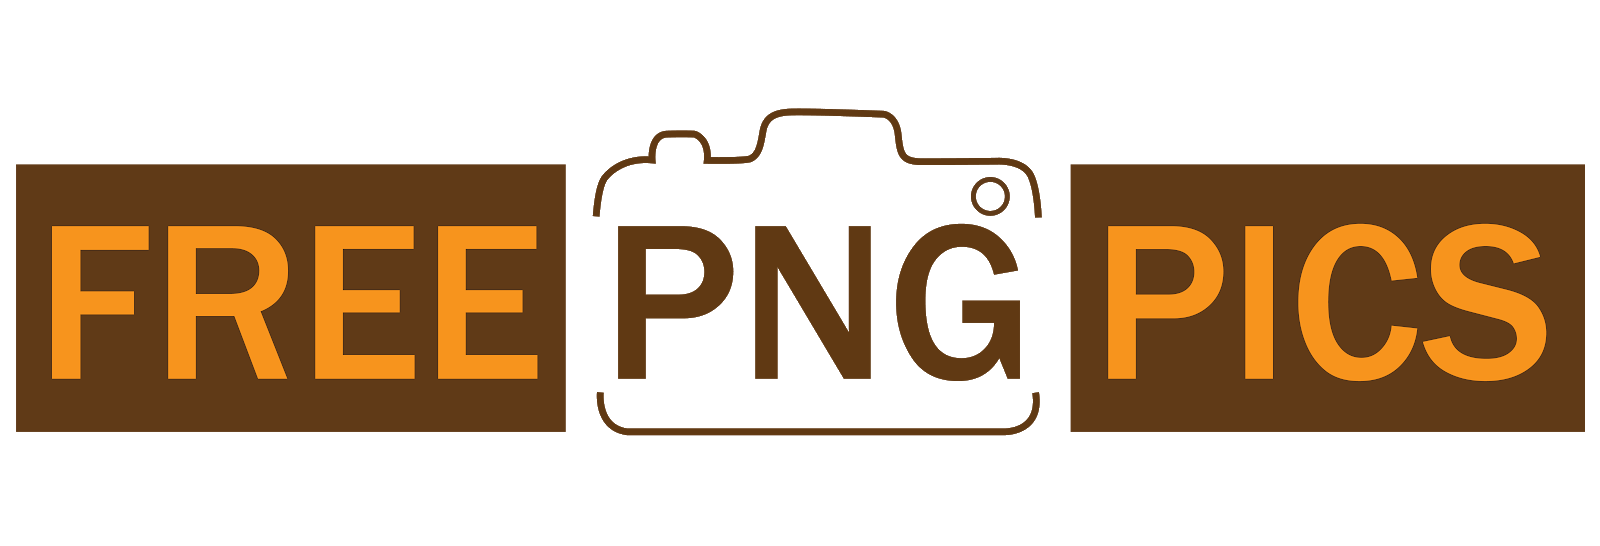 FREE PNG PICS